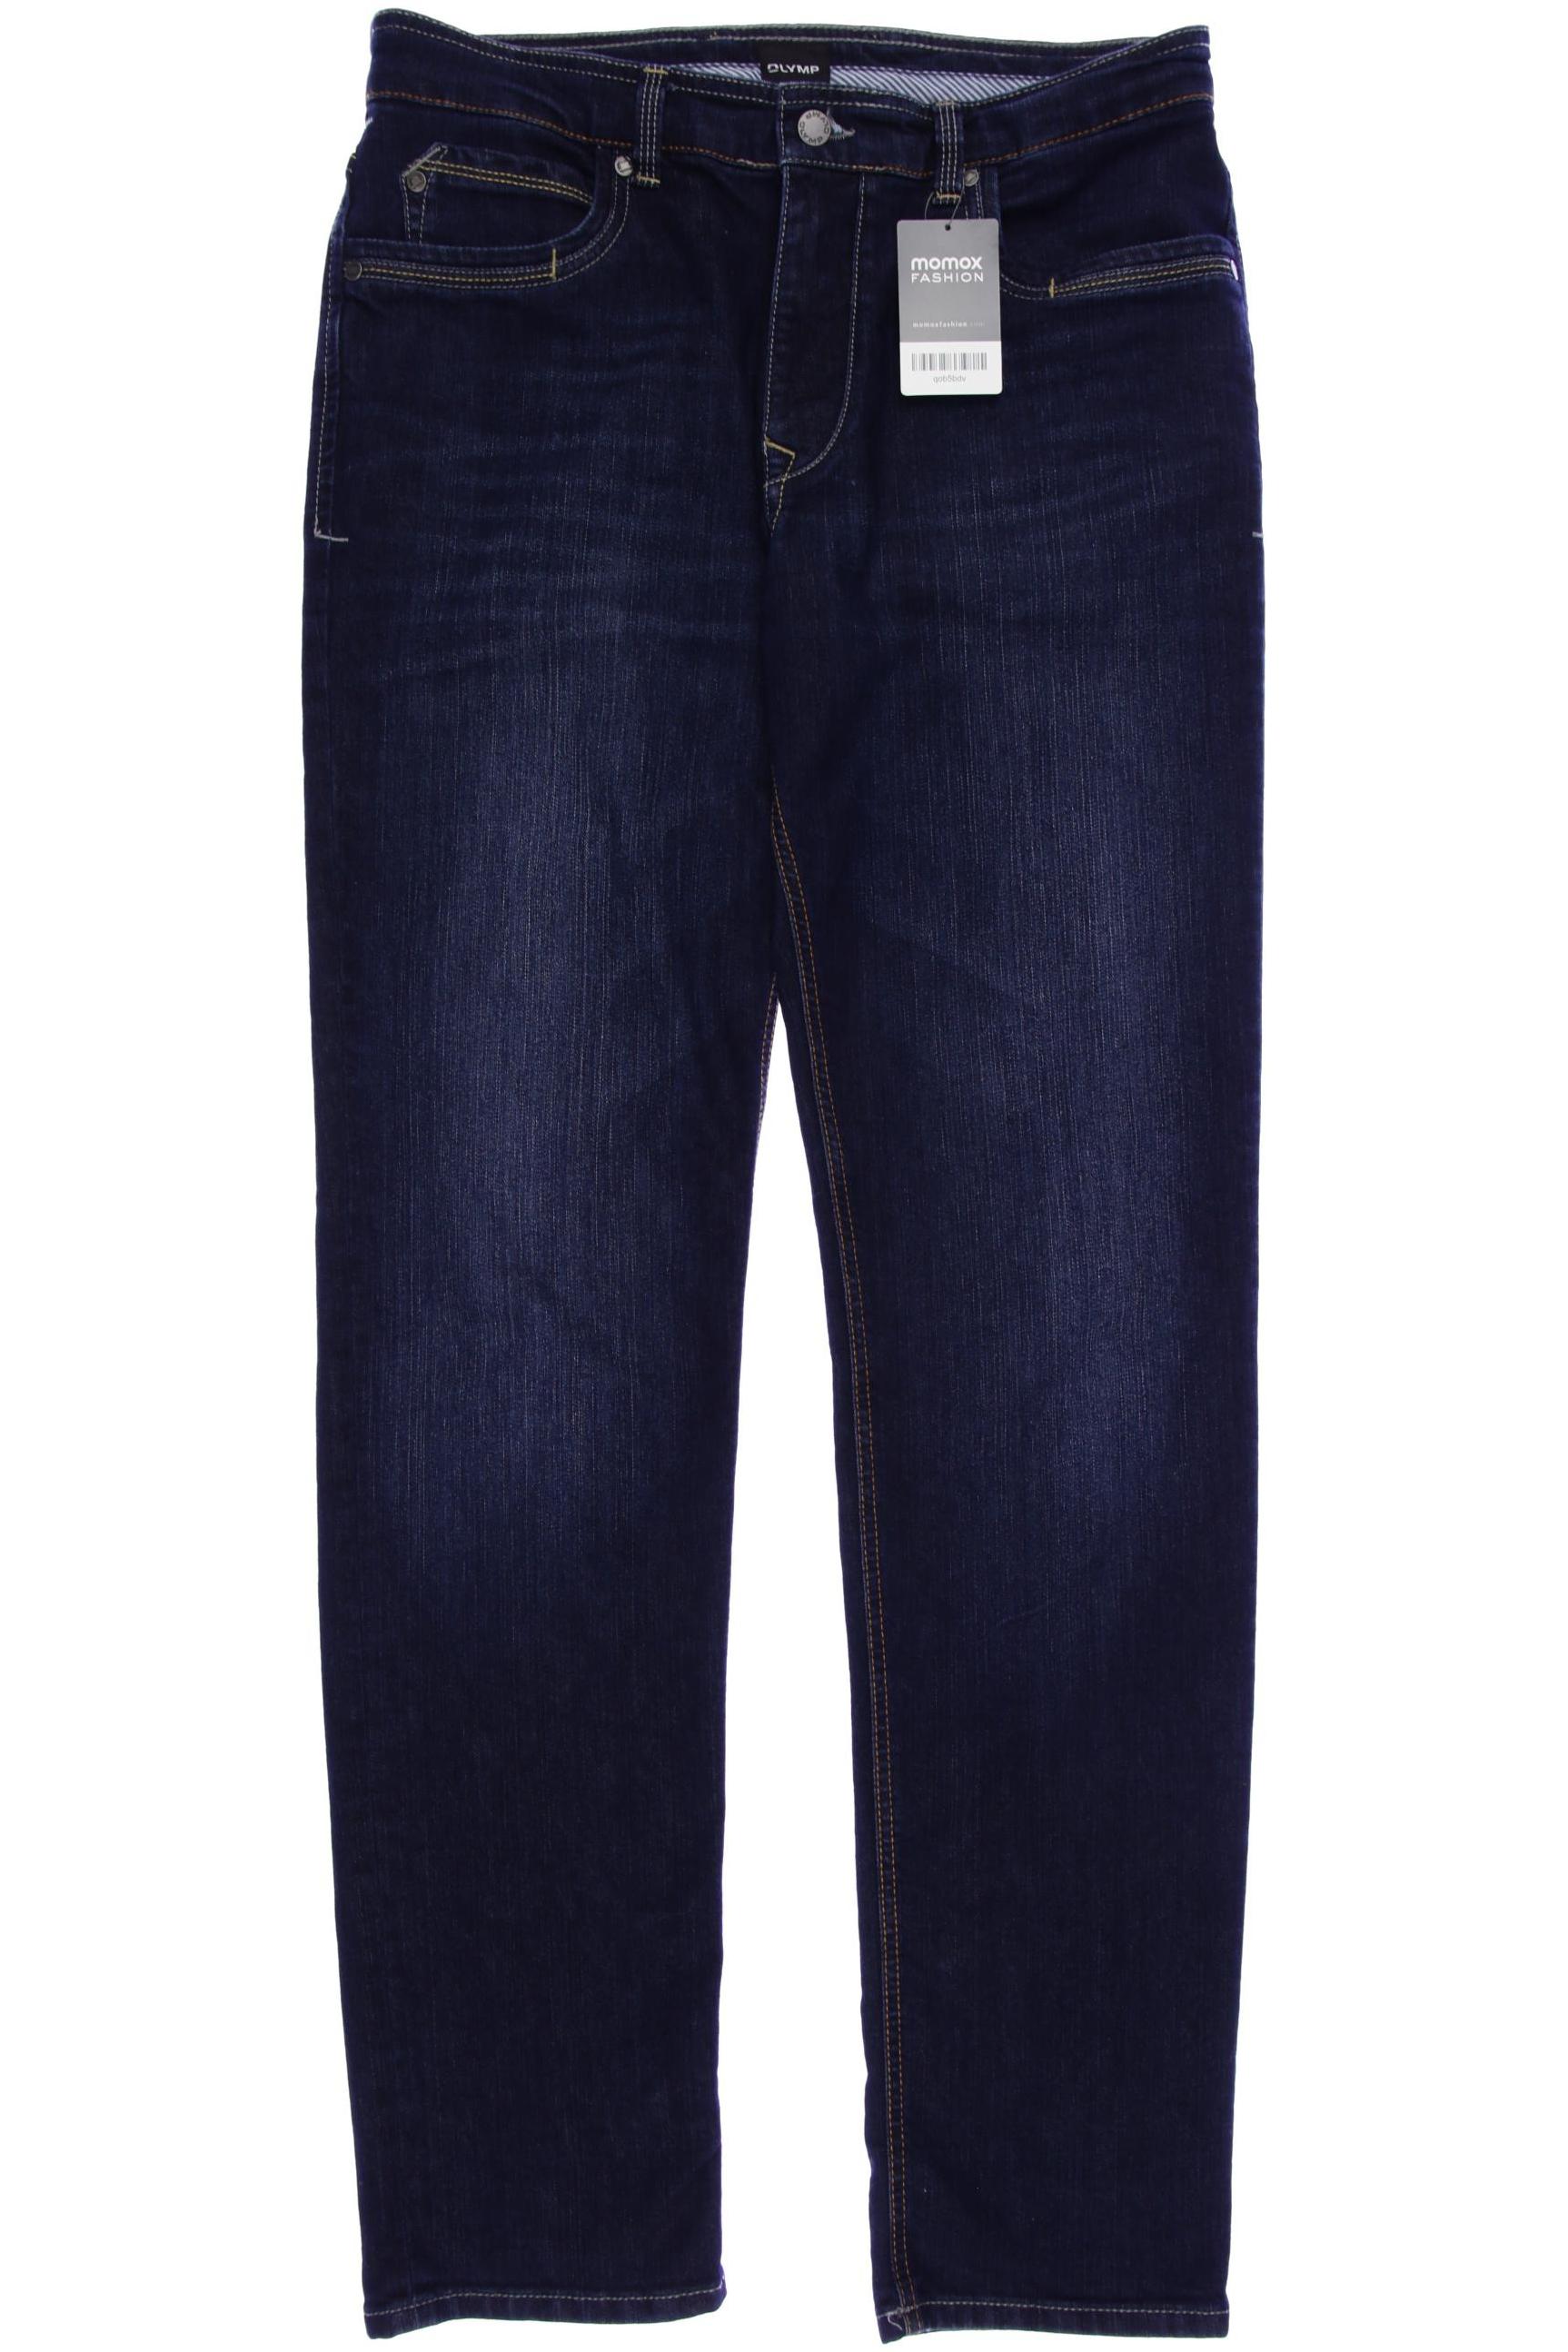 Olymp Herren Jeans, marineblau, Gr. 52 von Olymp